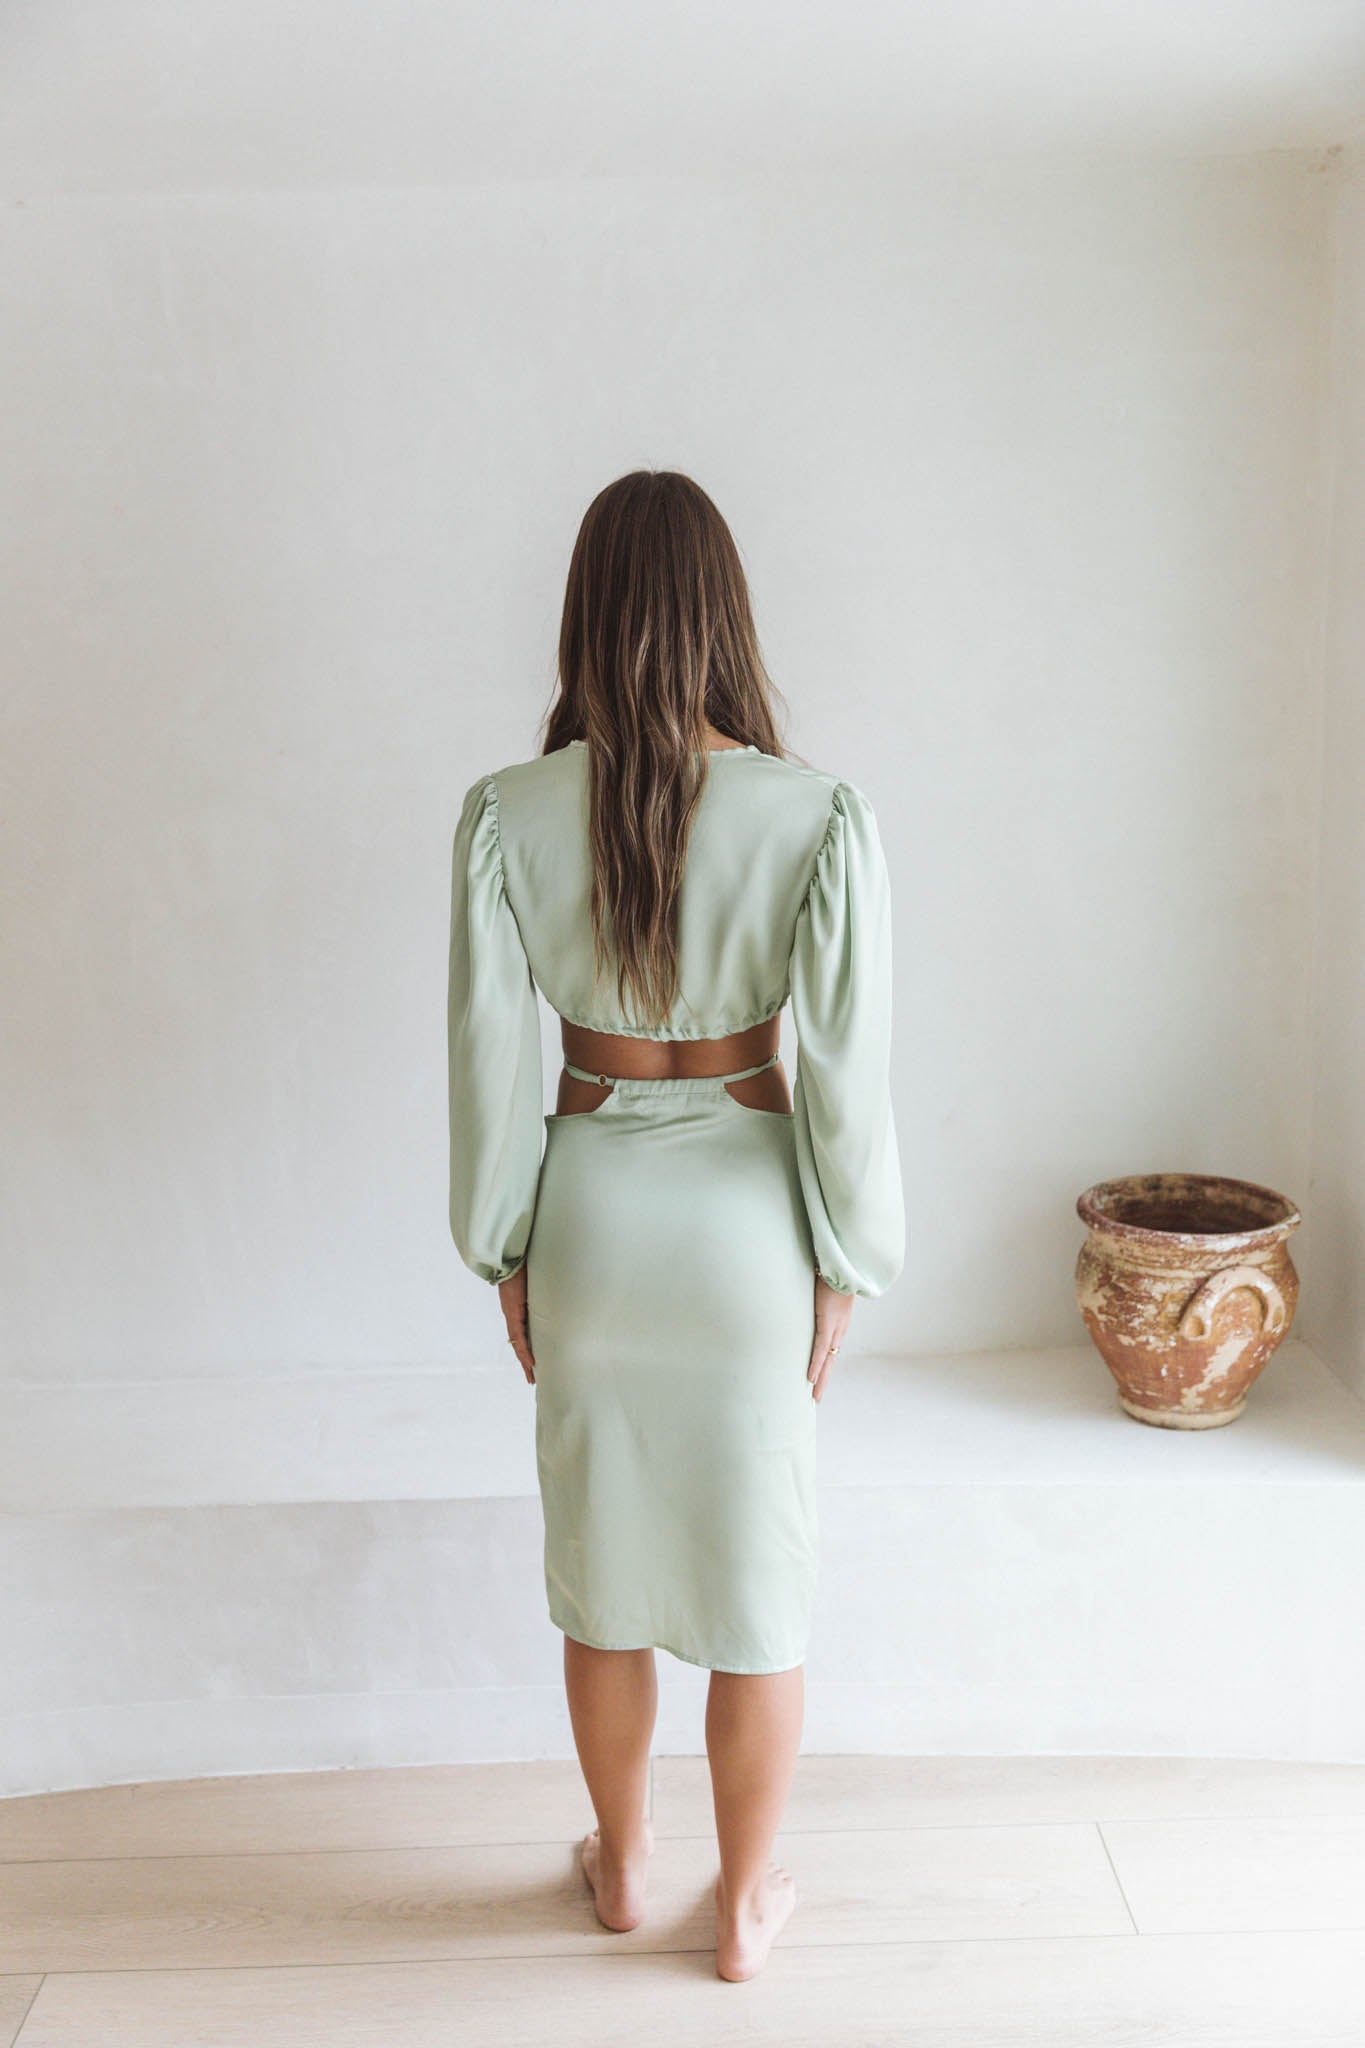 Jenna Long Sleeve Pastel Green Crop Top - SOAH